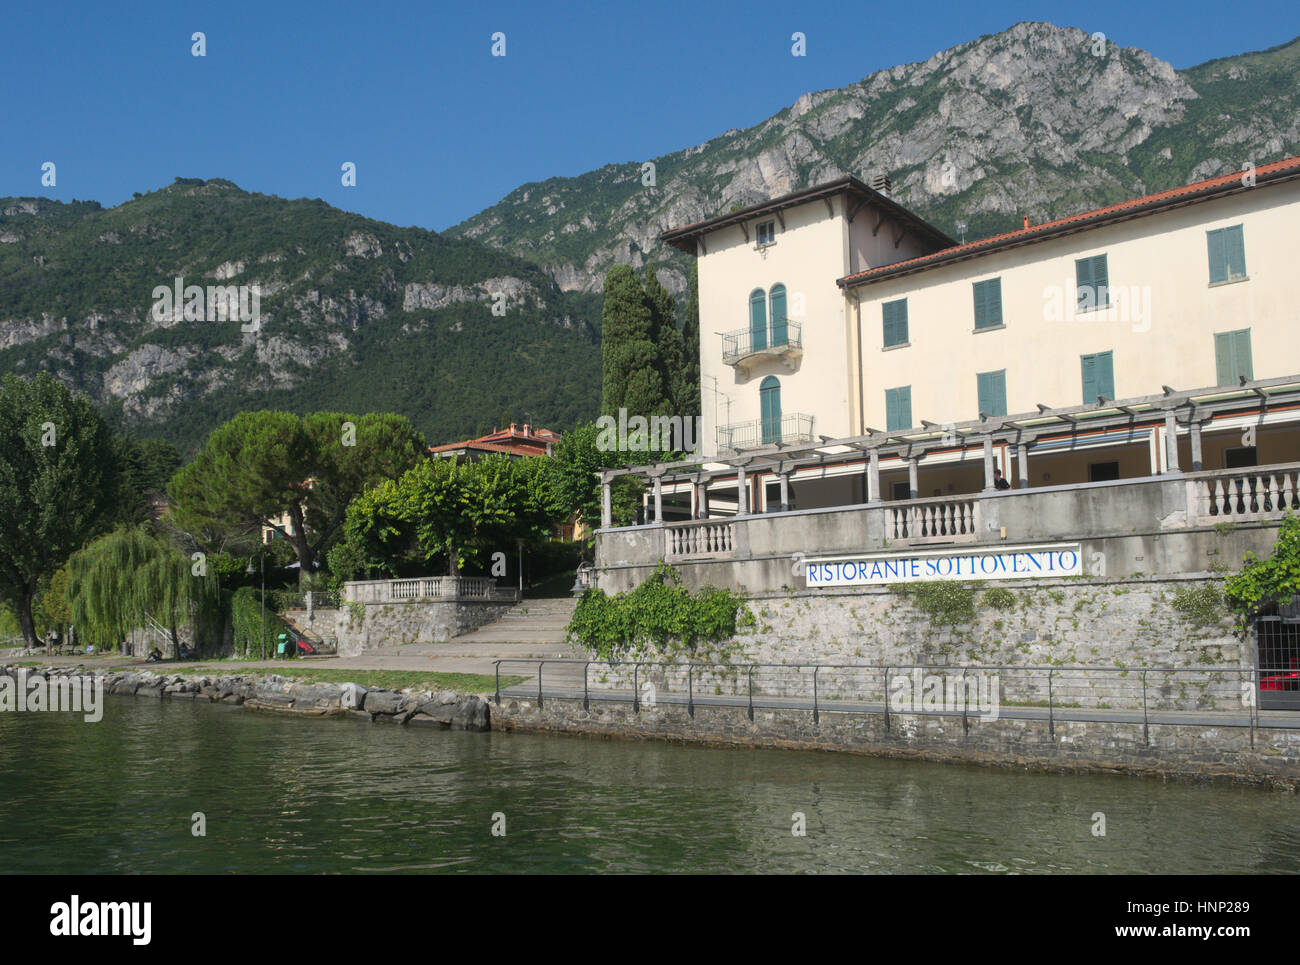 Sottovento restaurant in Lierna, Lake Como, Italy Stock Photo